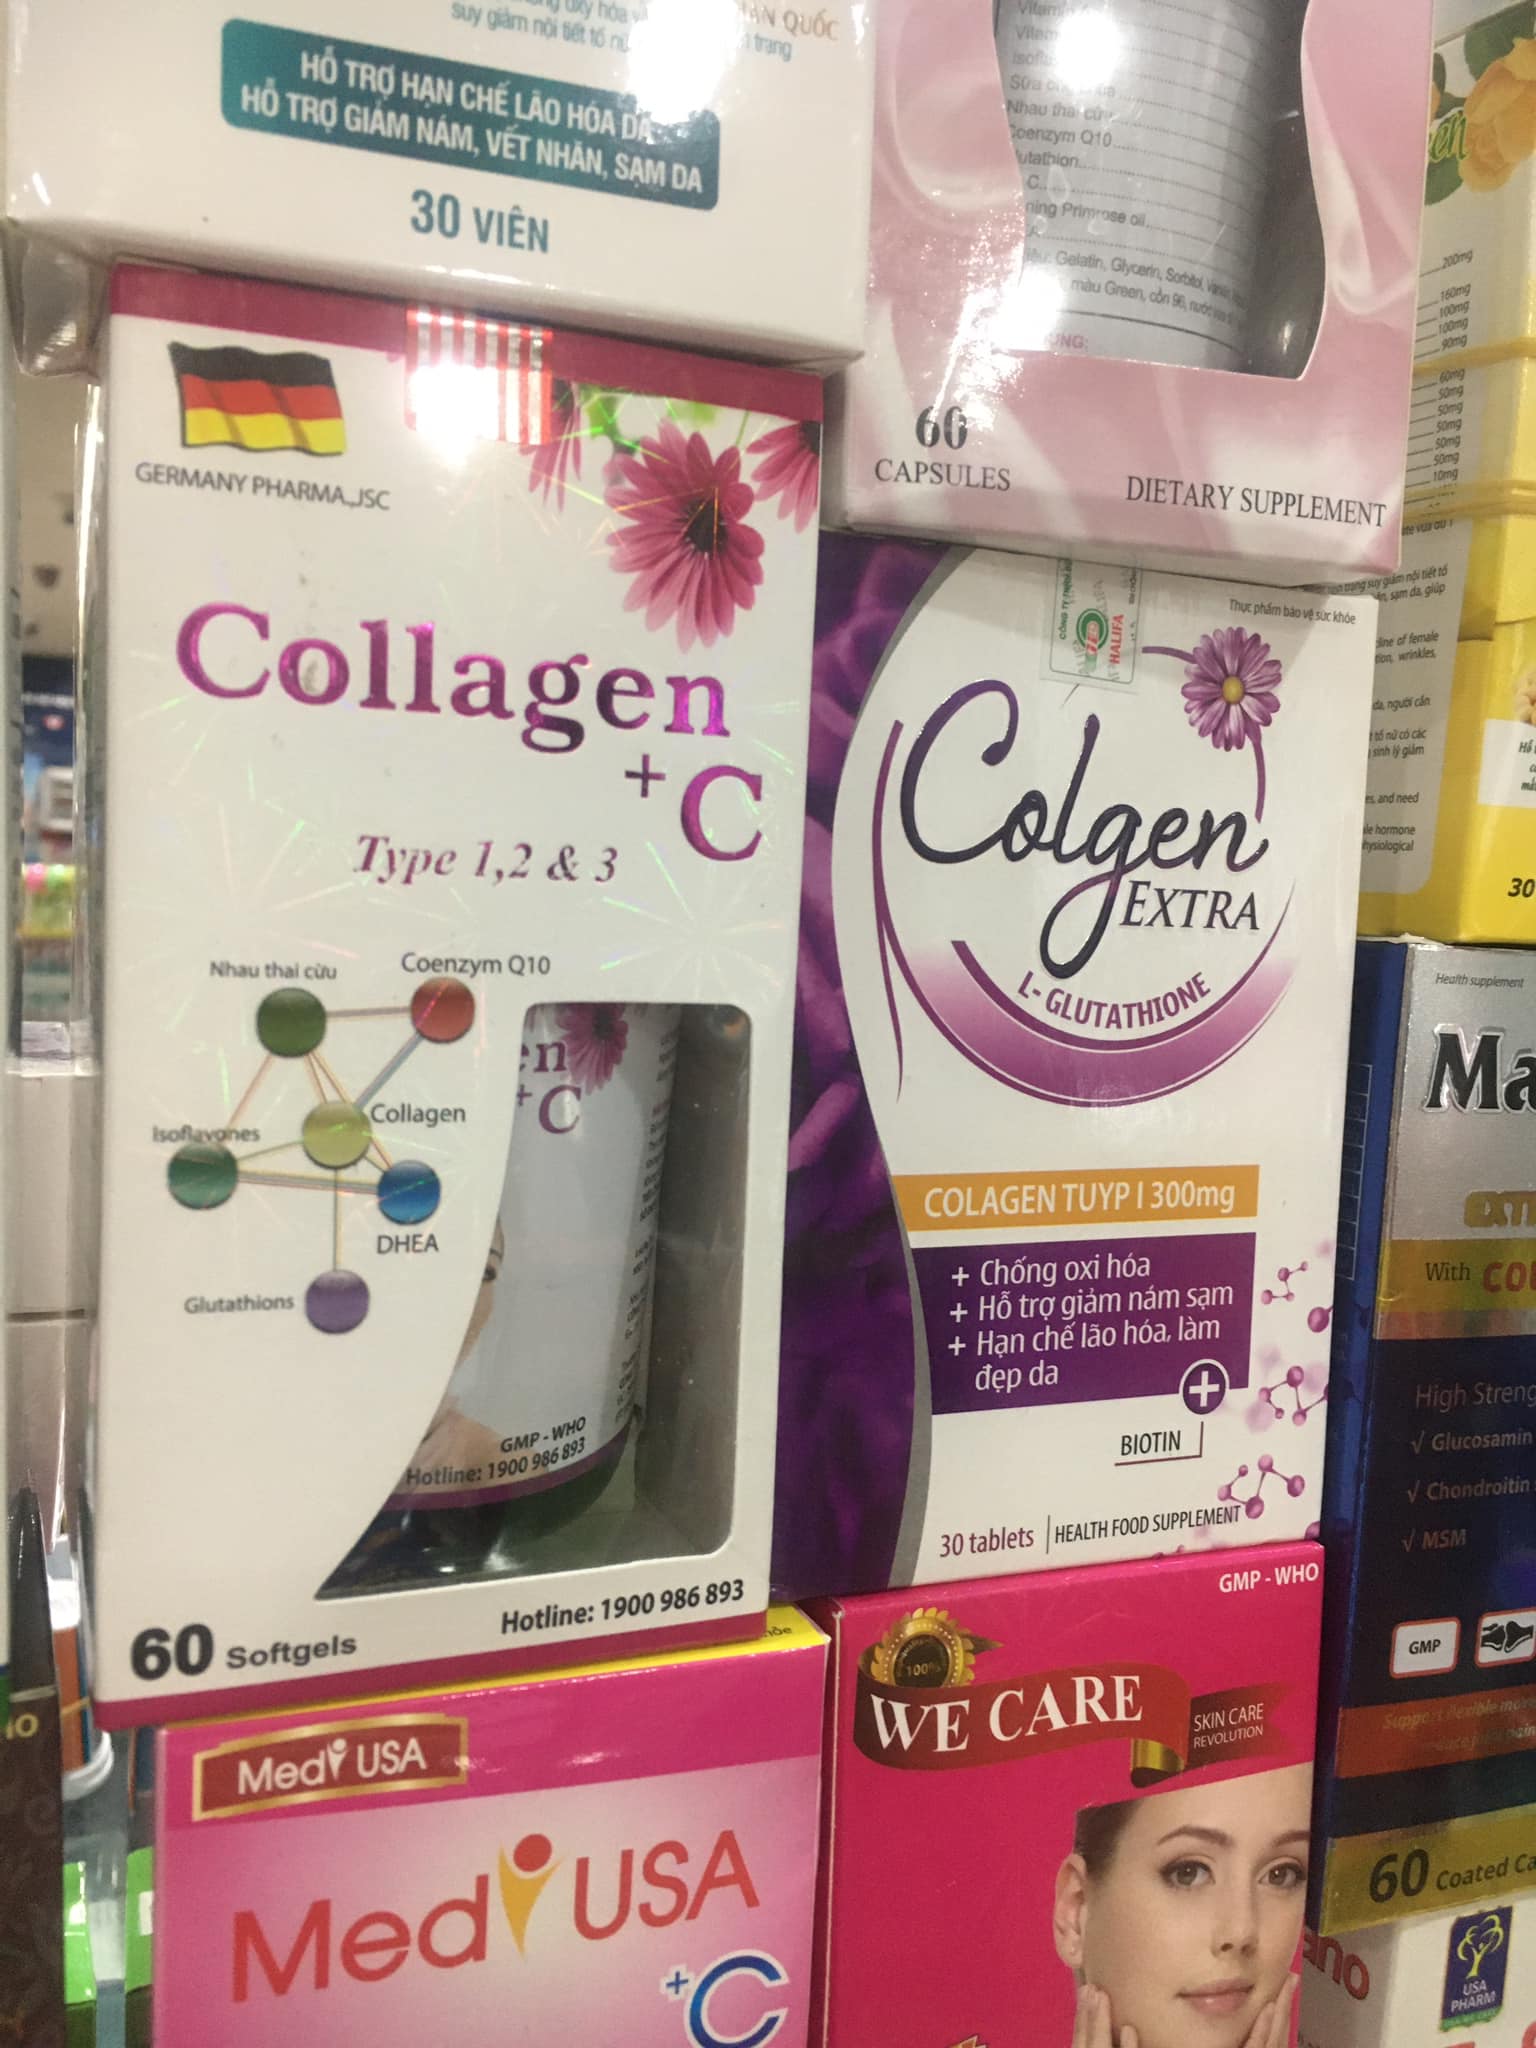 Collagen +C Type 1 2 & 3